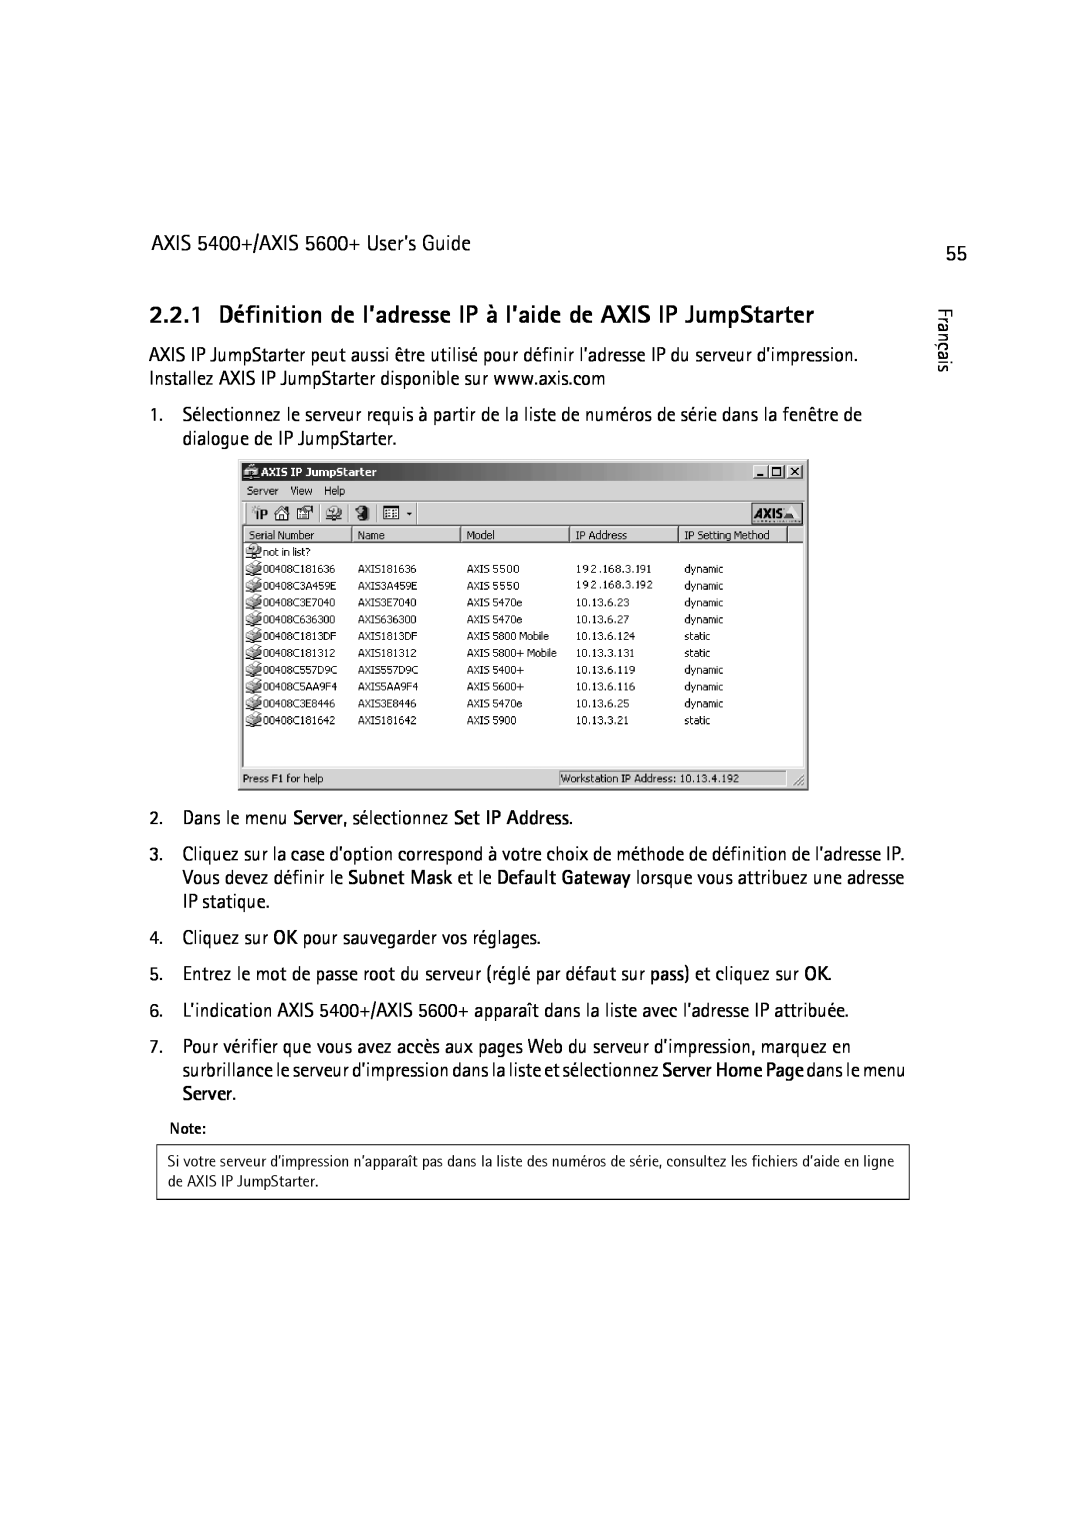 Dell manual 2.2.1 Définition de l’adresse IP à l’aide de AXIS IP JumpStarter, AXIS 5400+/AXIS 5600+ User’s Guide 